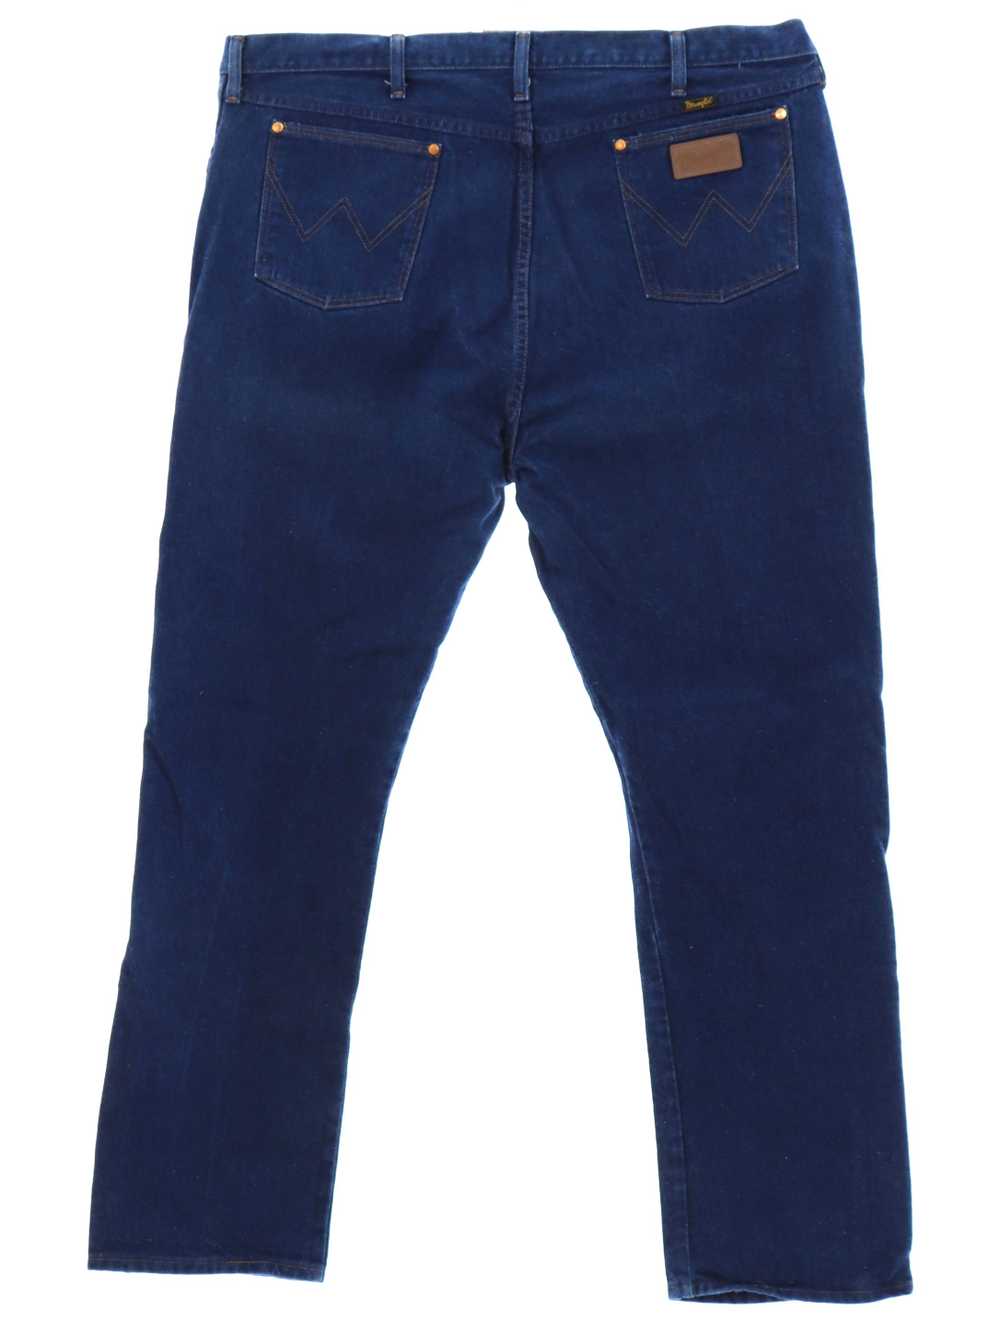 1990's 1995) Mens Wrangler Denim Jeans Pants - Gem